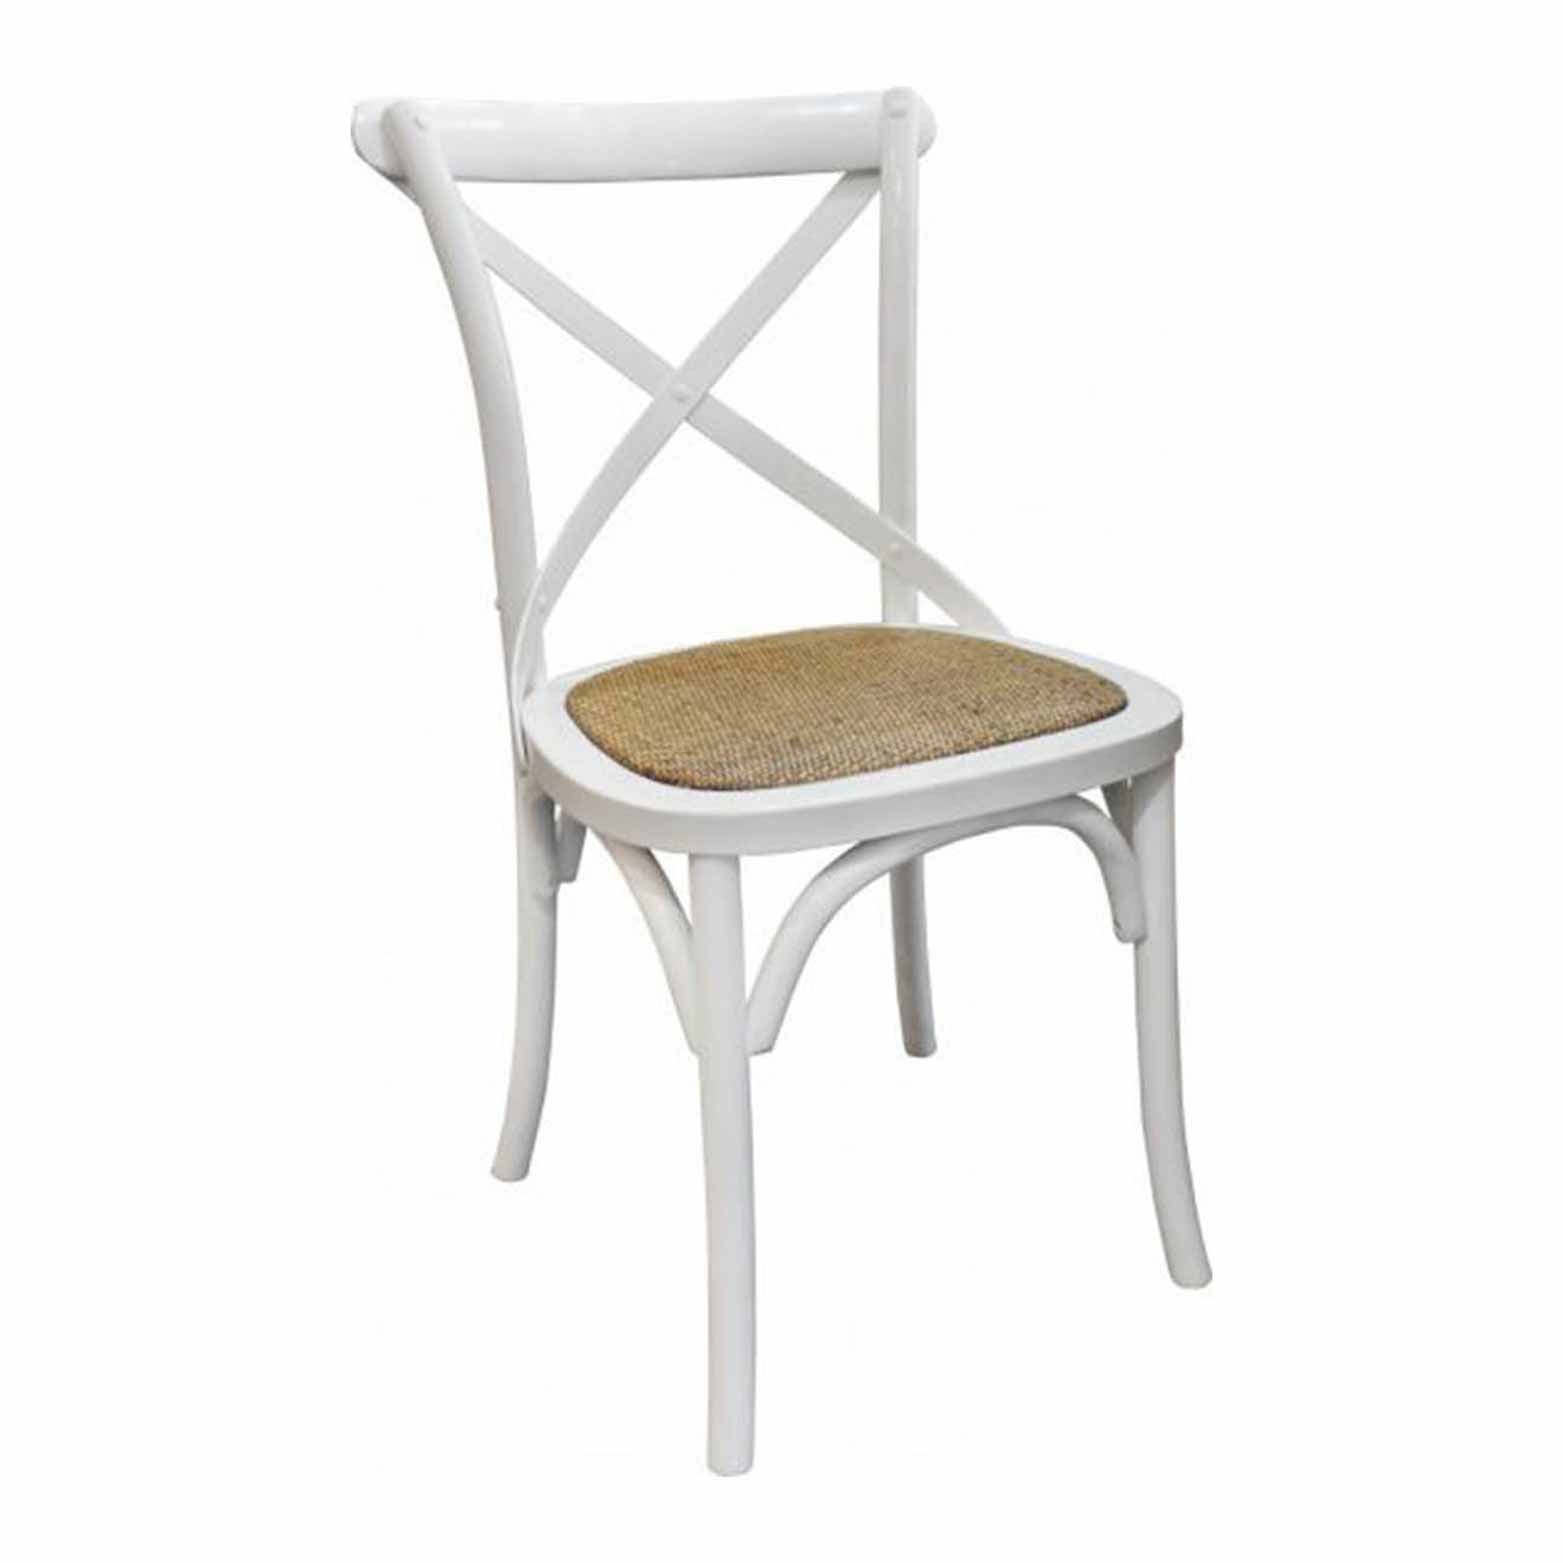 White Cross Back Chair | Lighter Rattan Seat